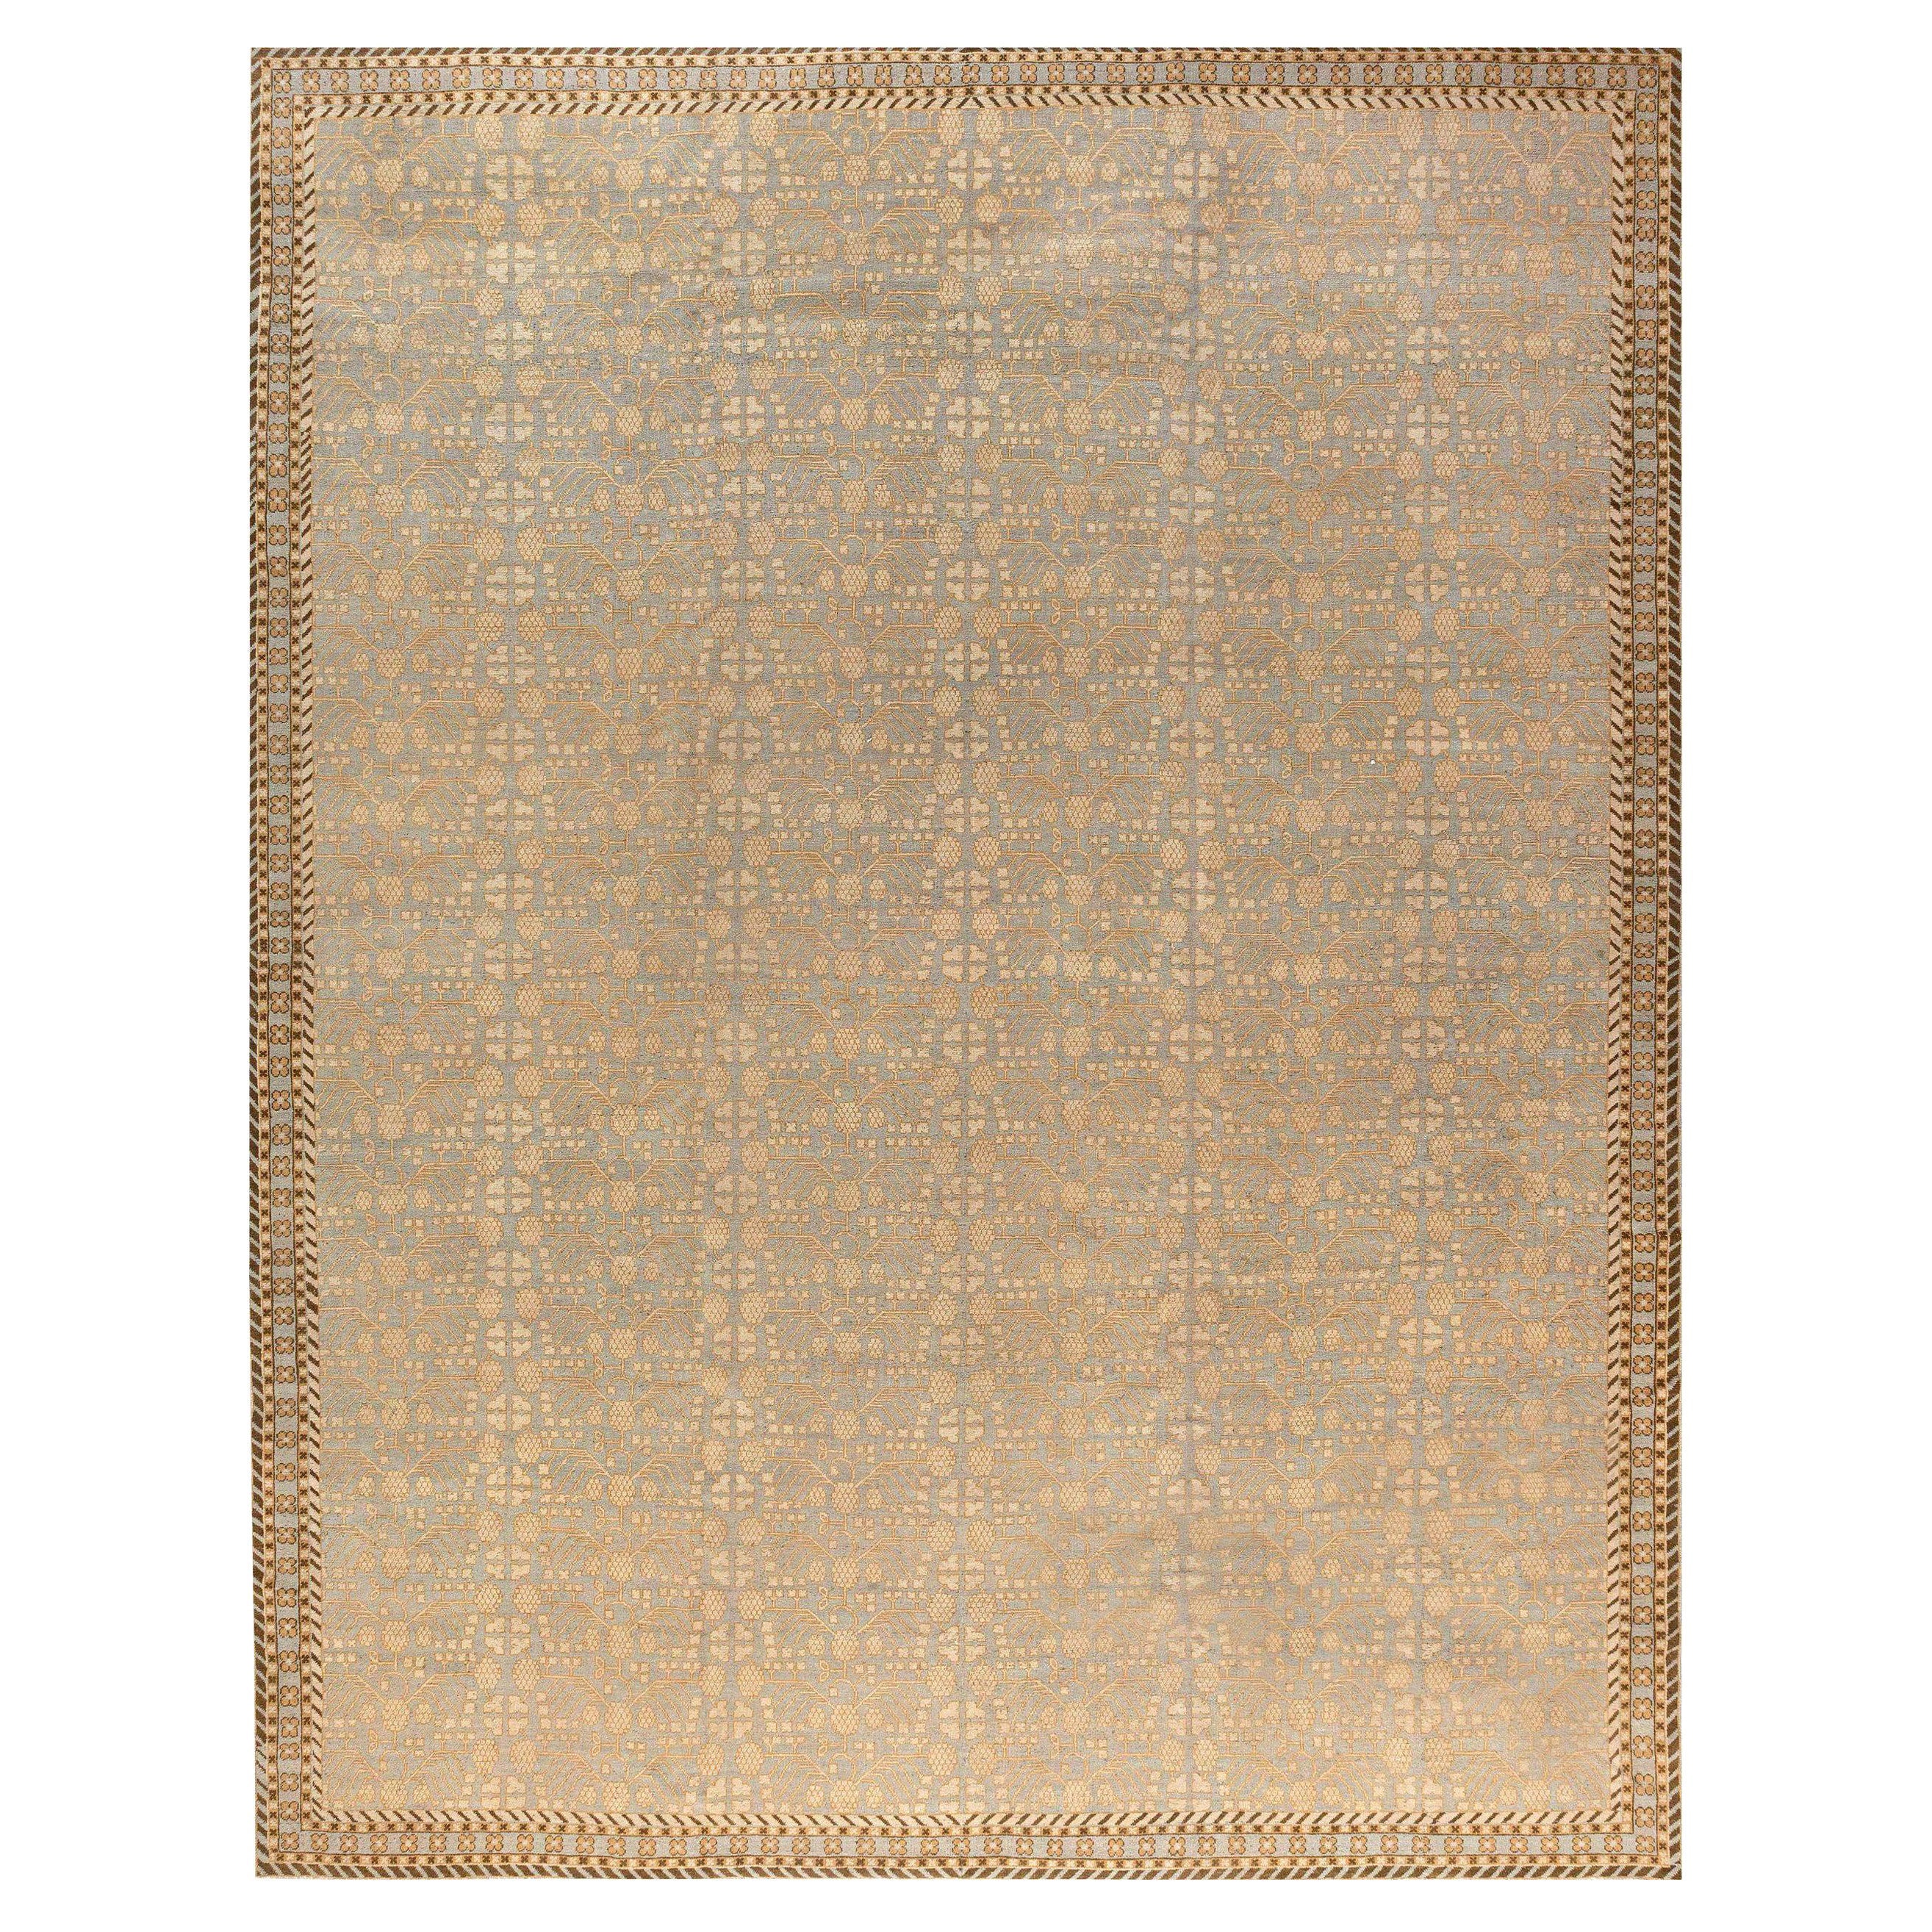 Contemporary Samarkand Traditional Design Handmade Wool Rug by Doris Leslie Blau For Sale